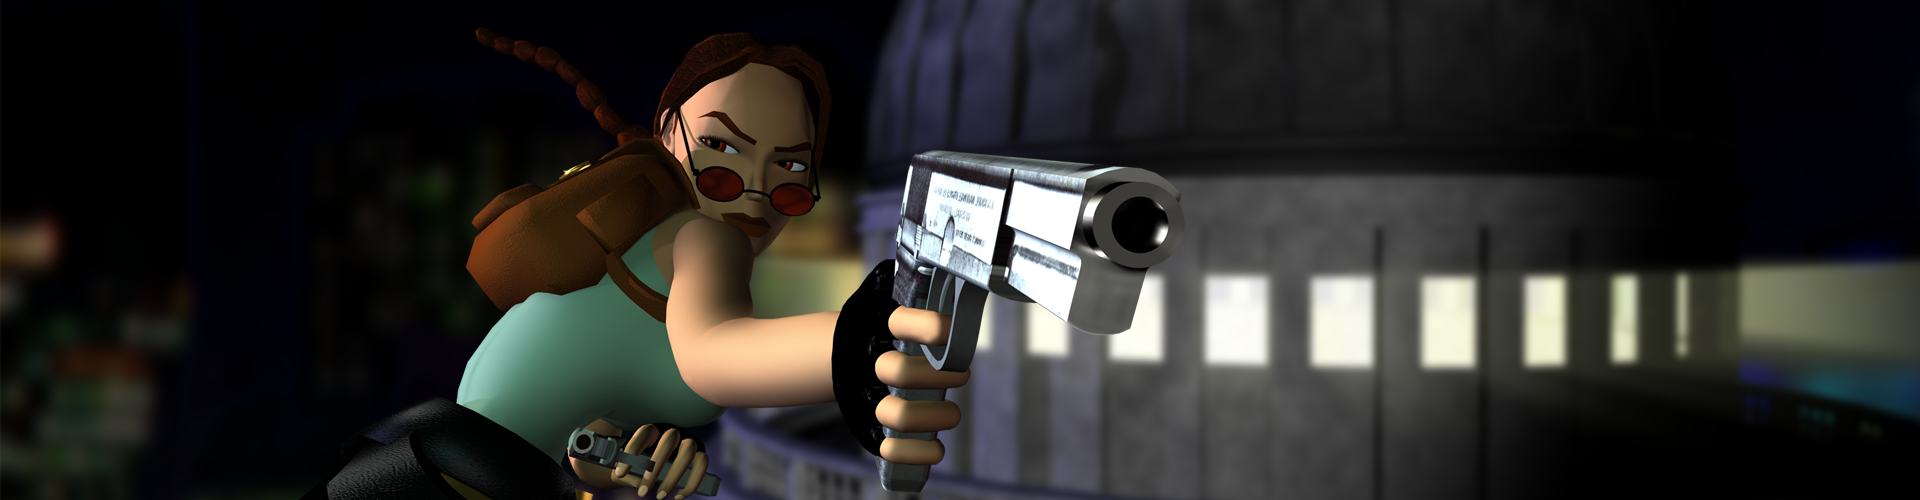 Tomb Raider III (1998): Mudanza de contenido